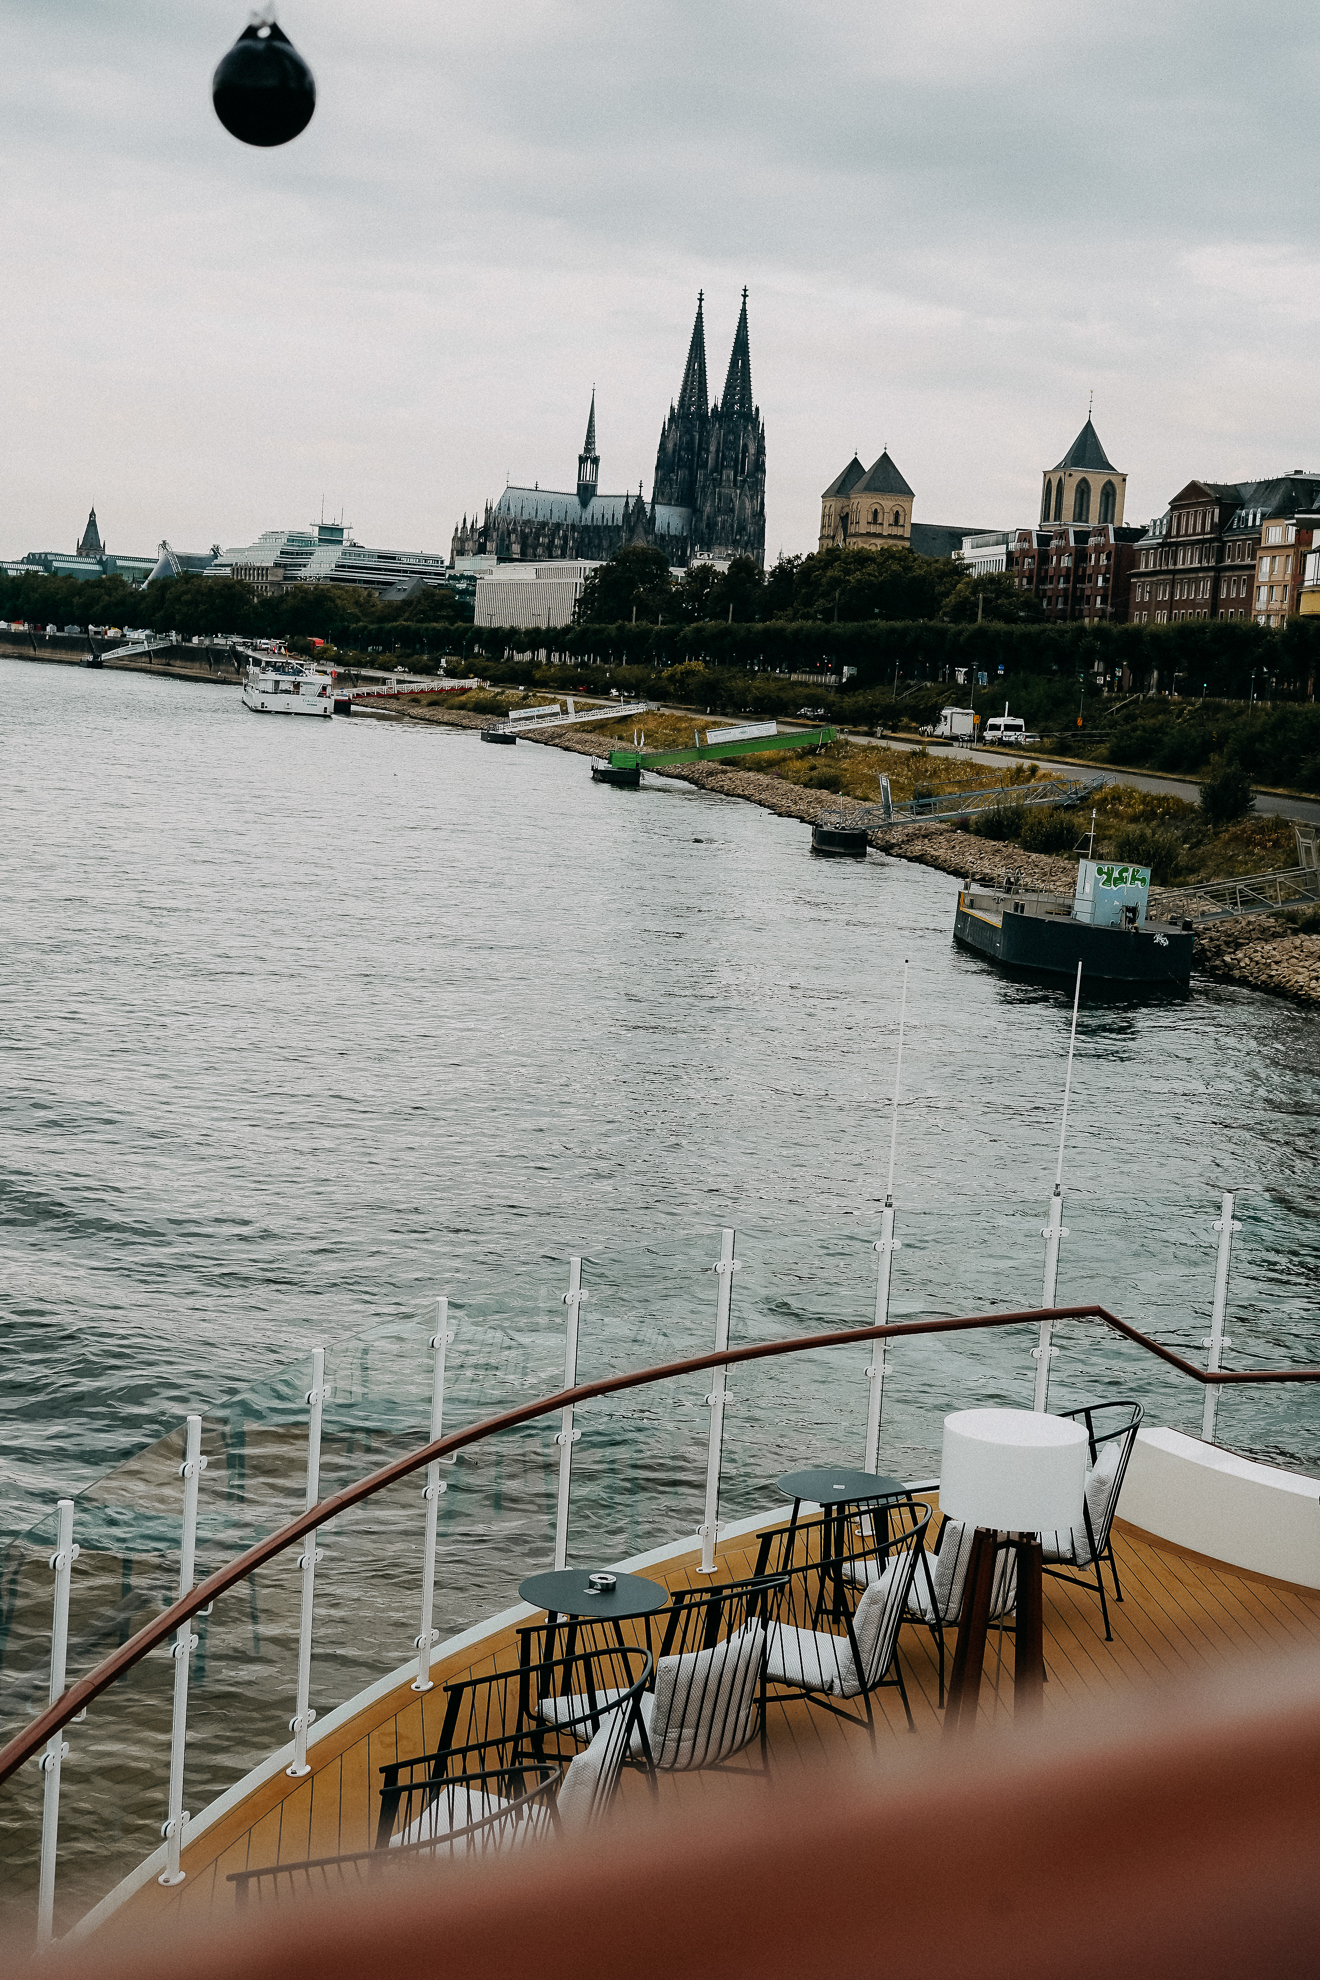 A-ROSA SENA Flusskreuzfahrt Rhein Lounge sitzecken deck Honeymoon Hochzeitsreise Reiseblog Kreuzfahrten